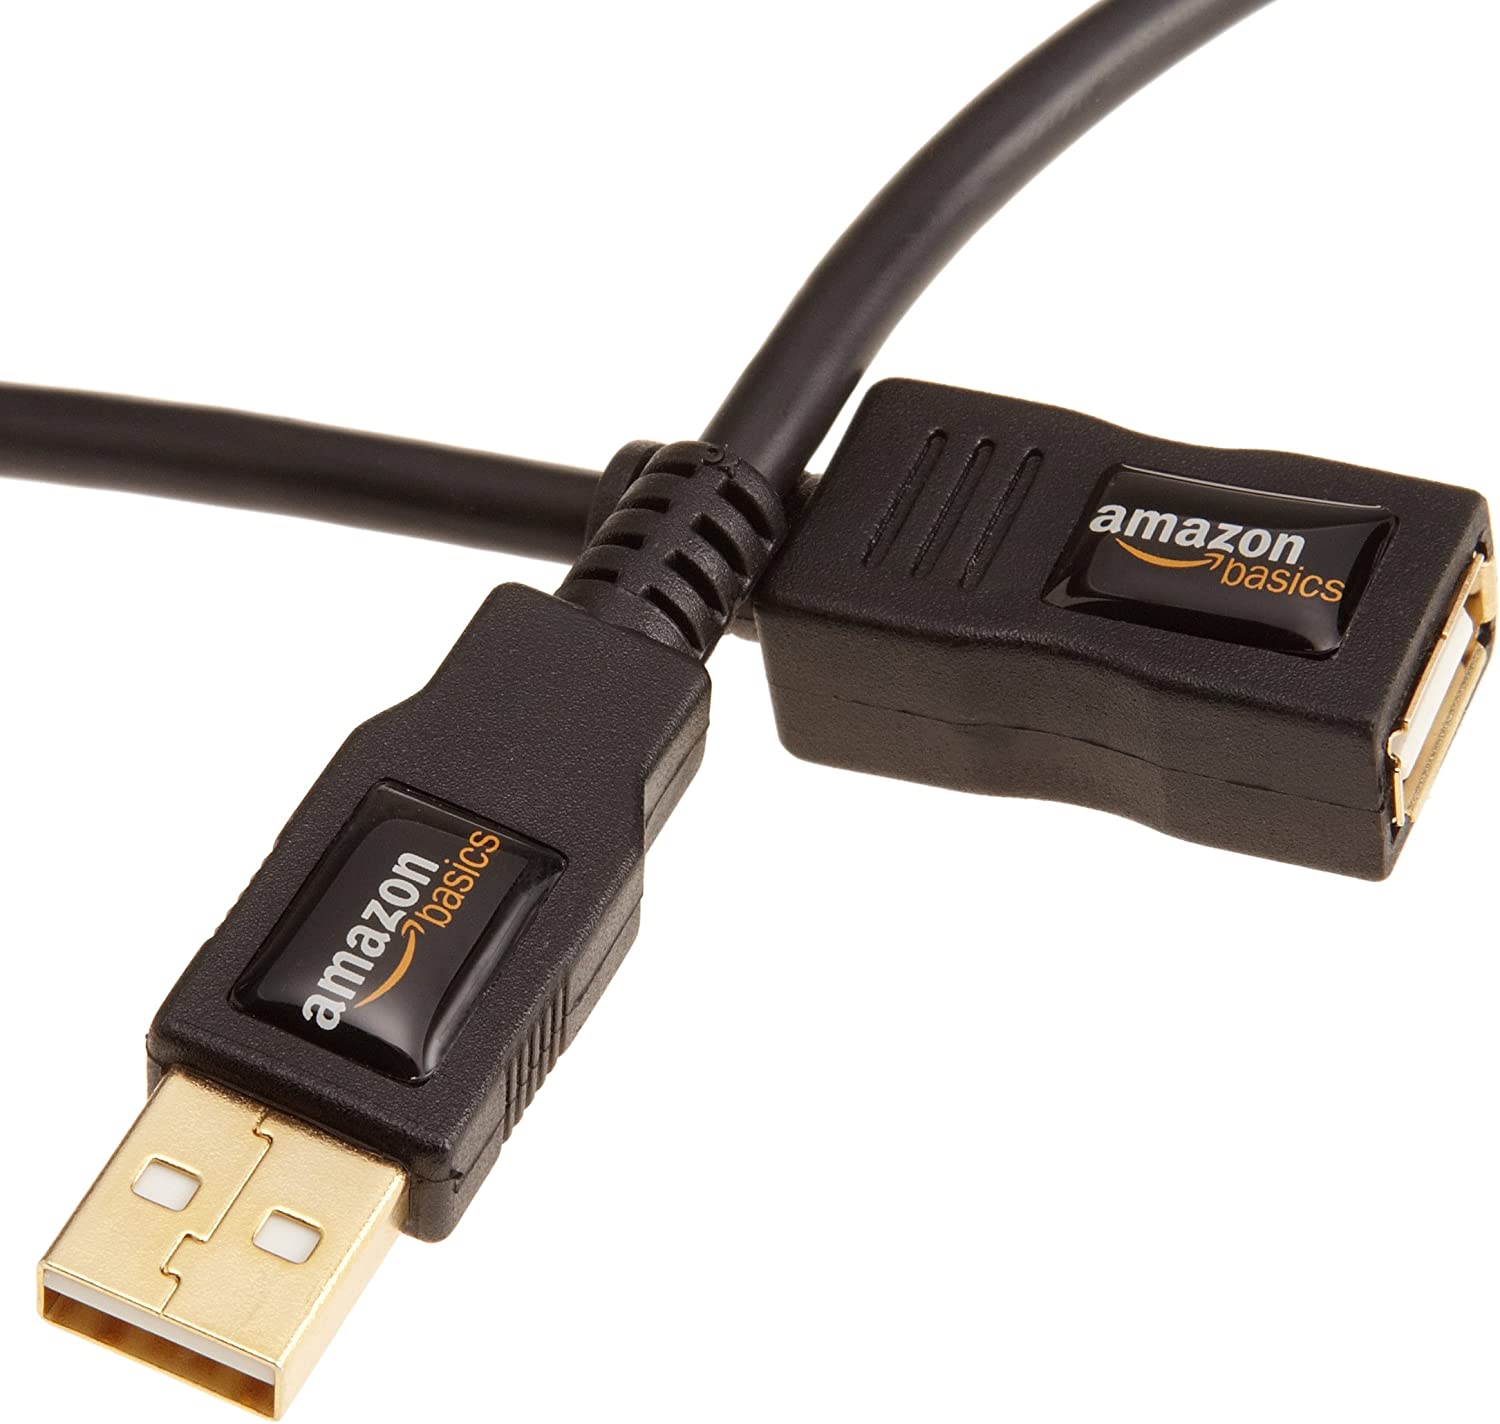 AmazonBasics Tablet USB 2.0 Extension Cord, 9.8-Foot